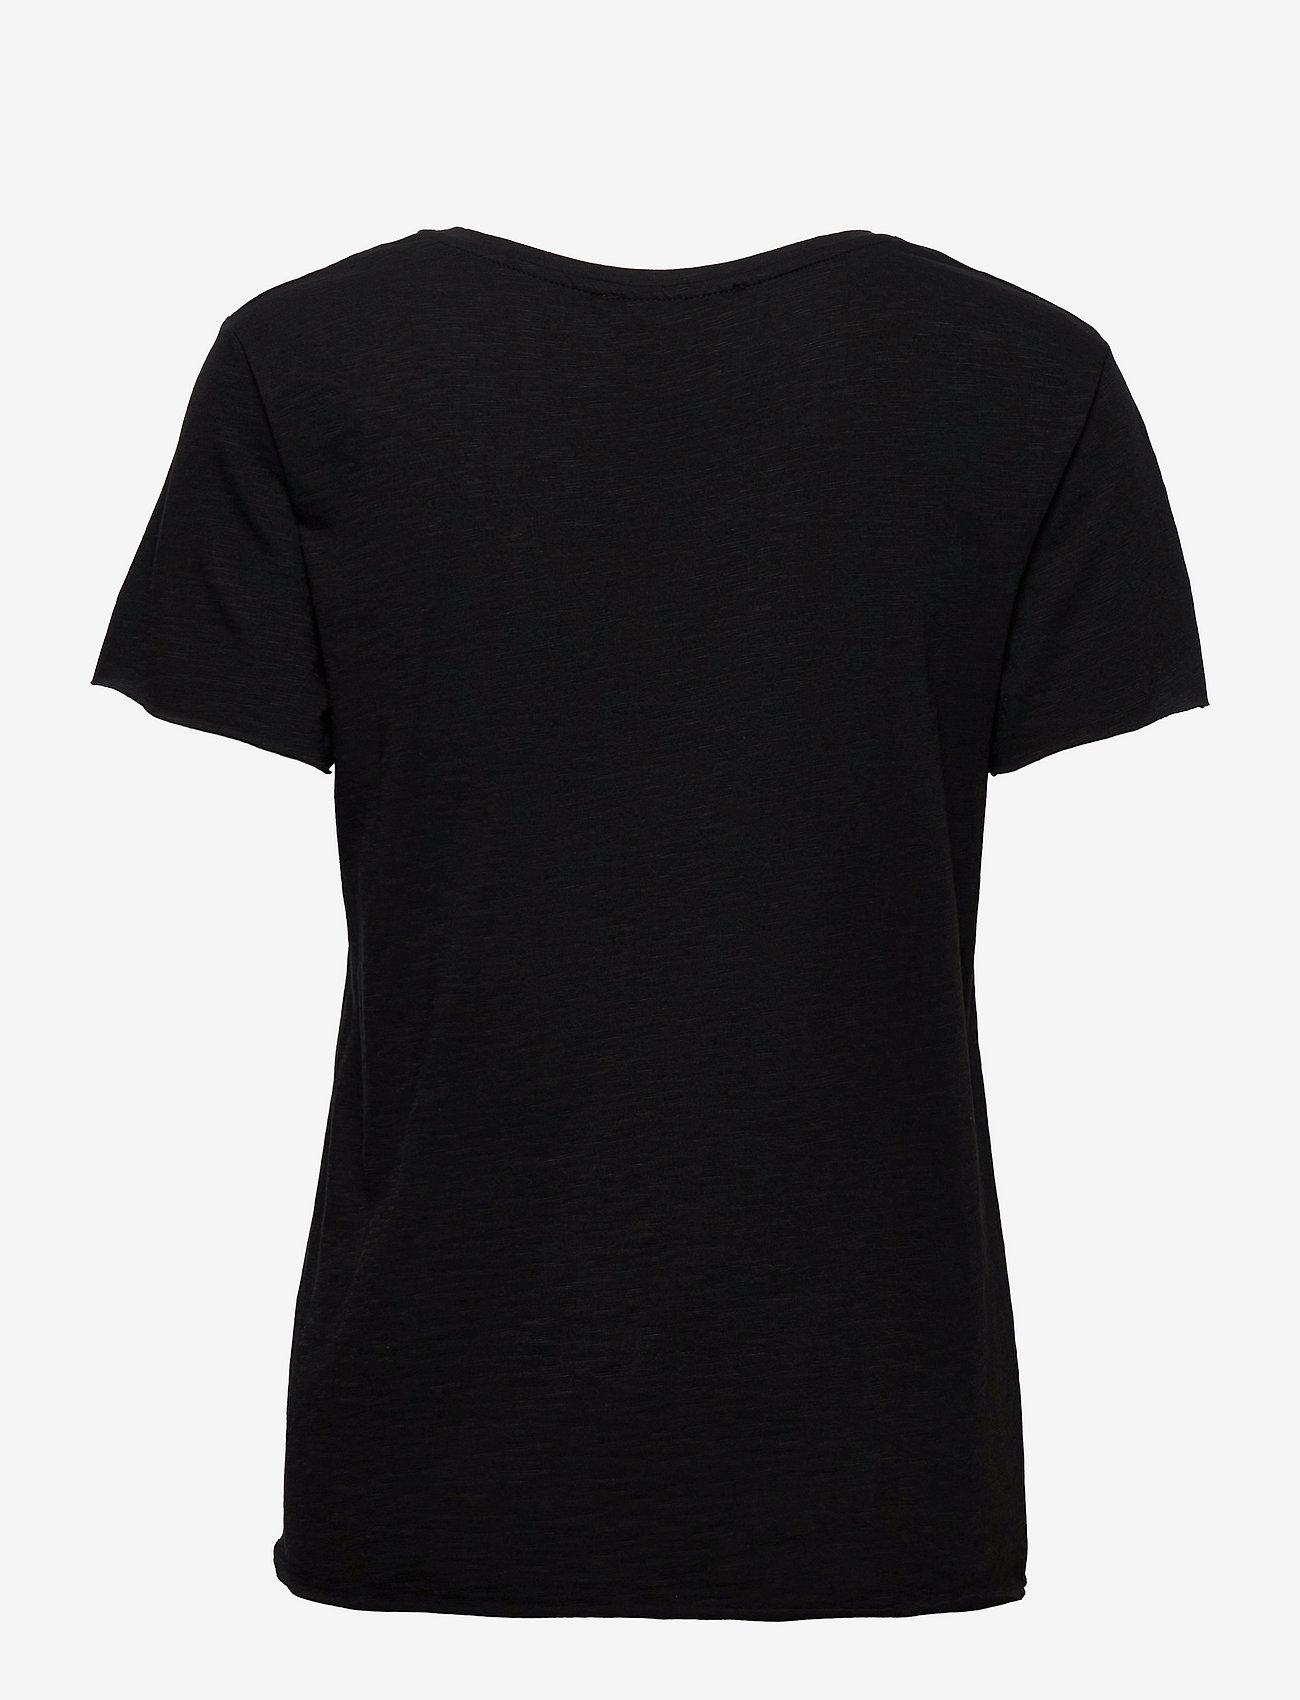 My Essential Wardrobe - 09 THE OTEE - t-shirts - black - 1